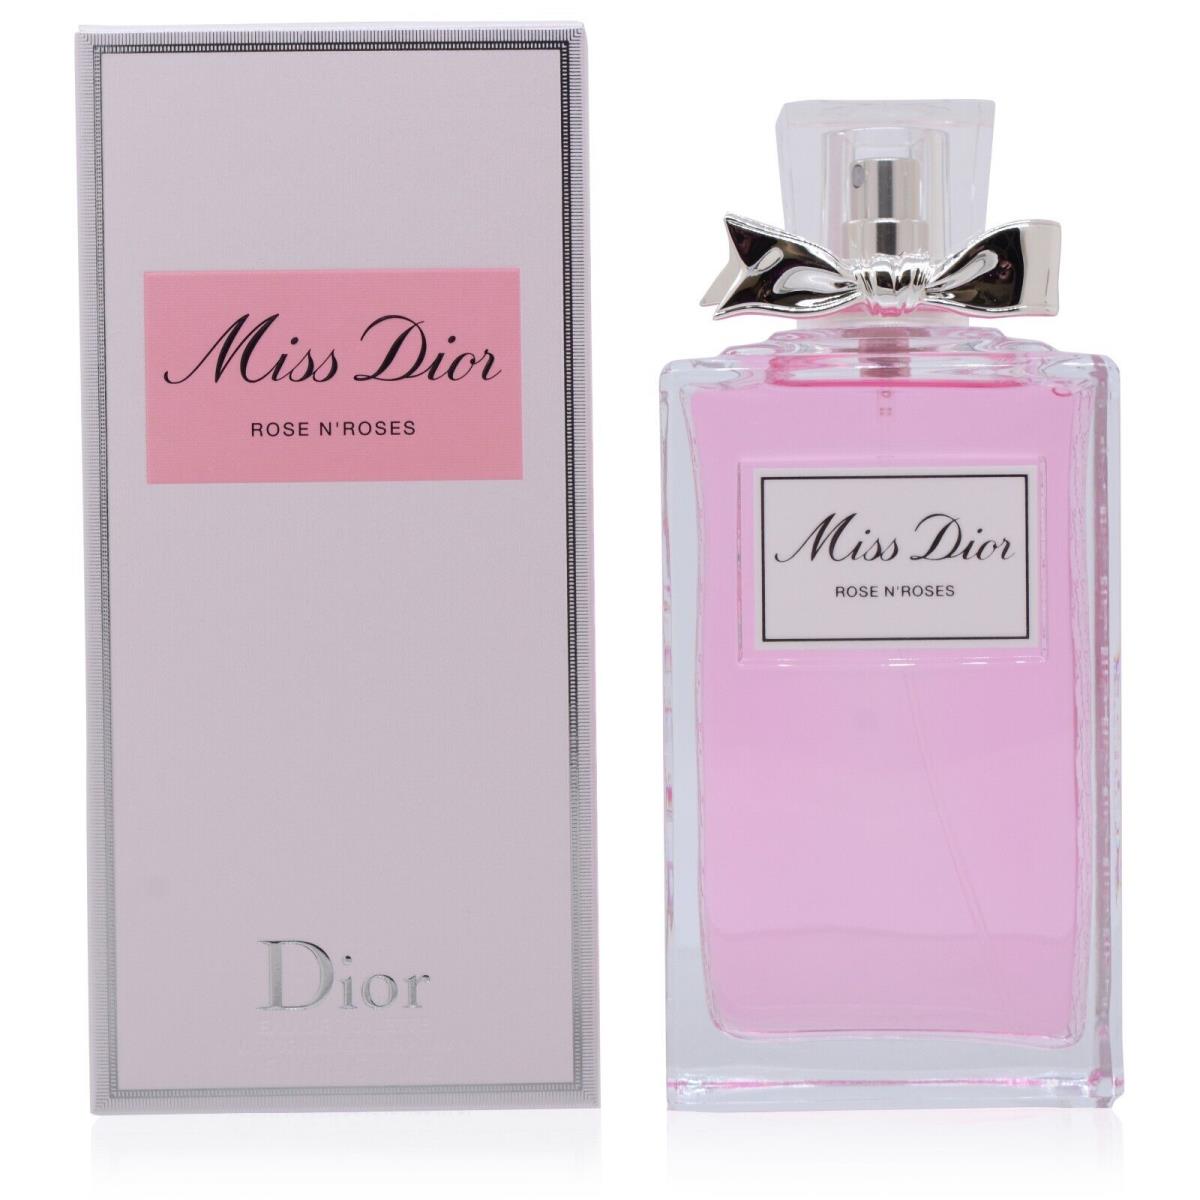 Miss Dior Rose Nroses/ch.dior Edt Spray 5.0 OZ 150 ML W -new